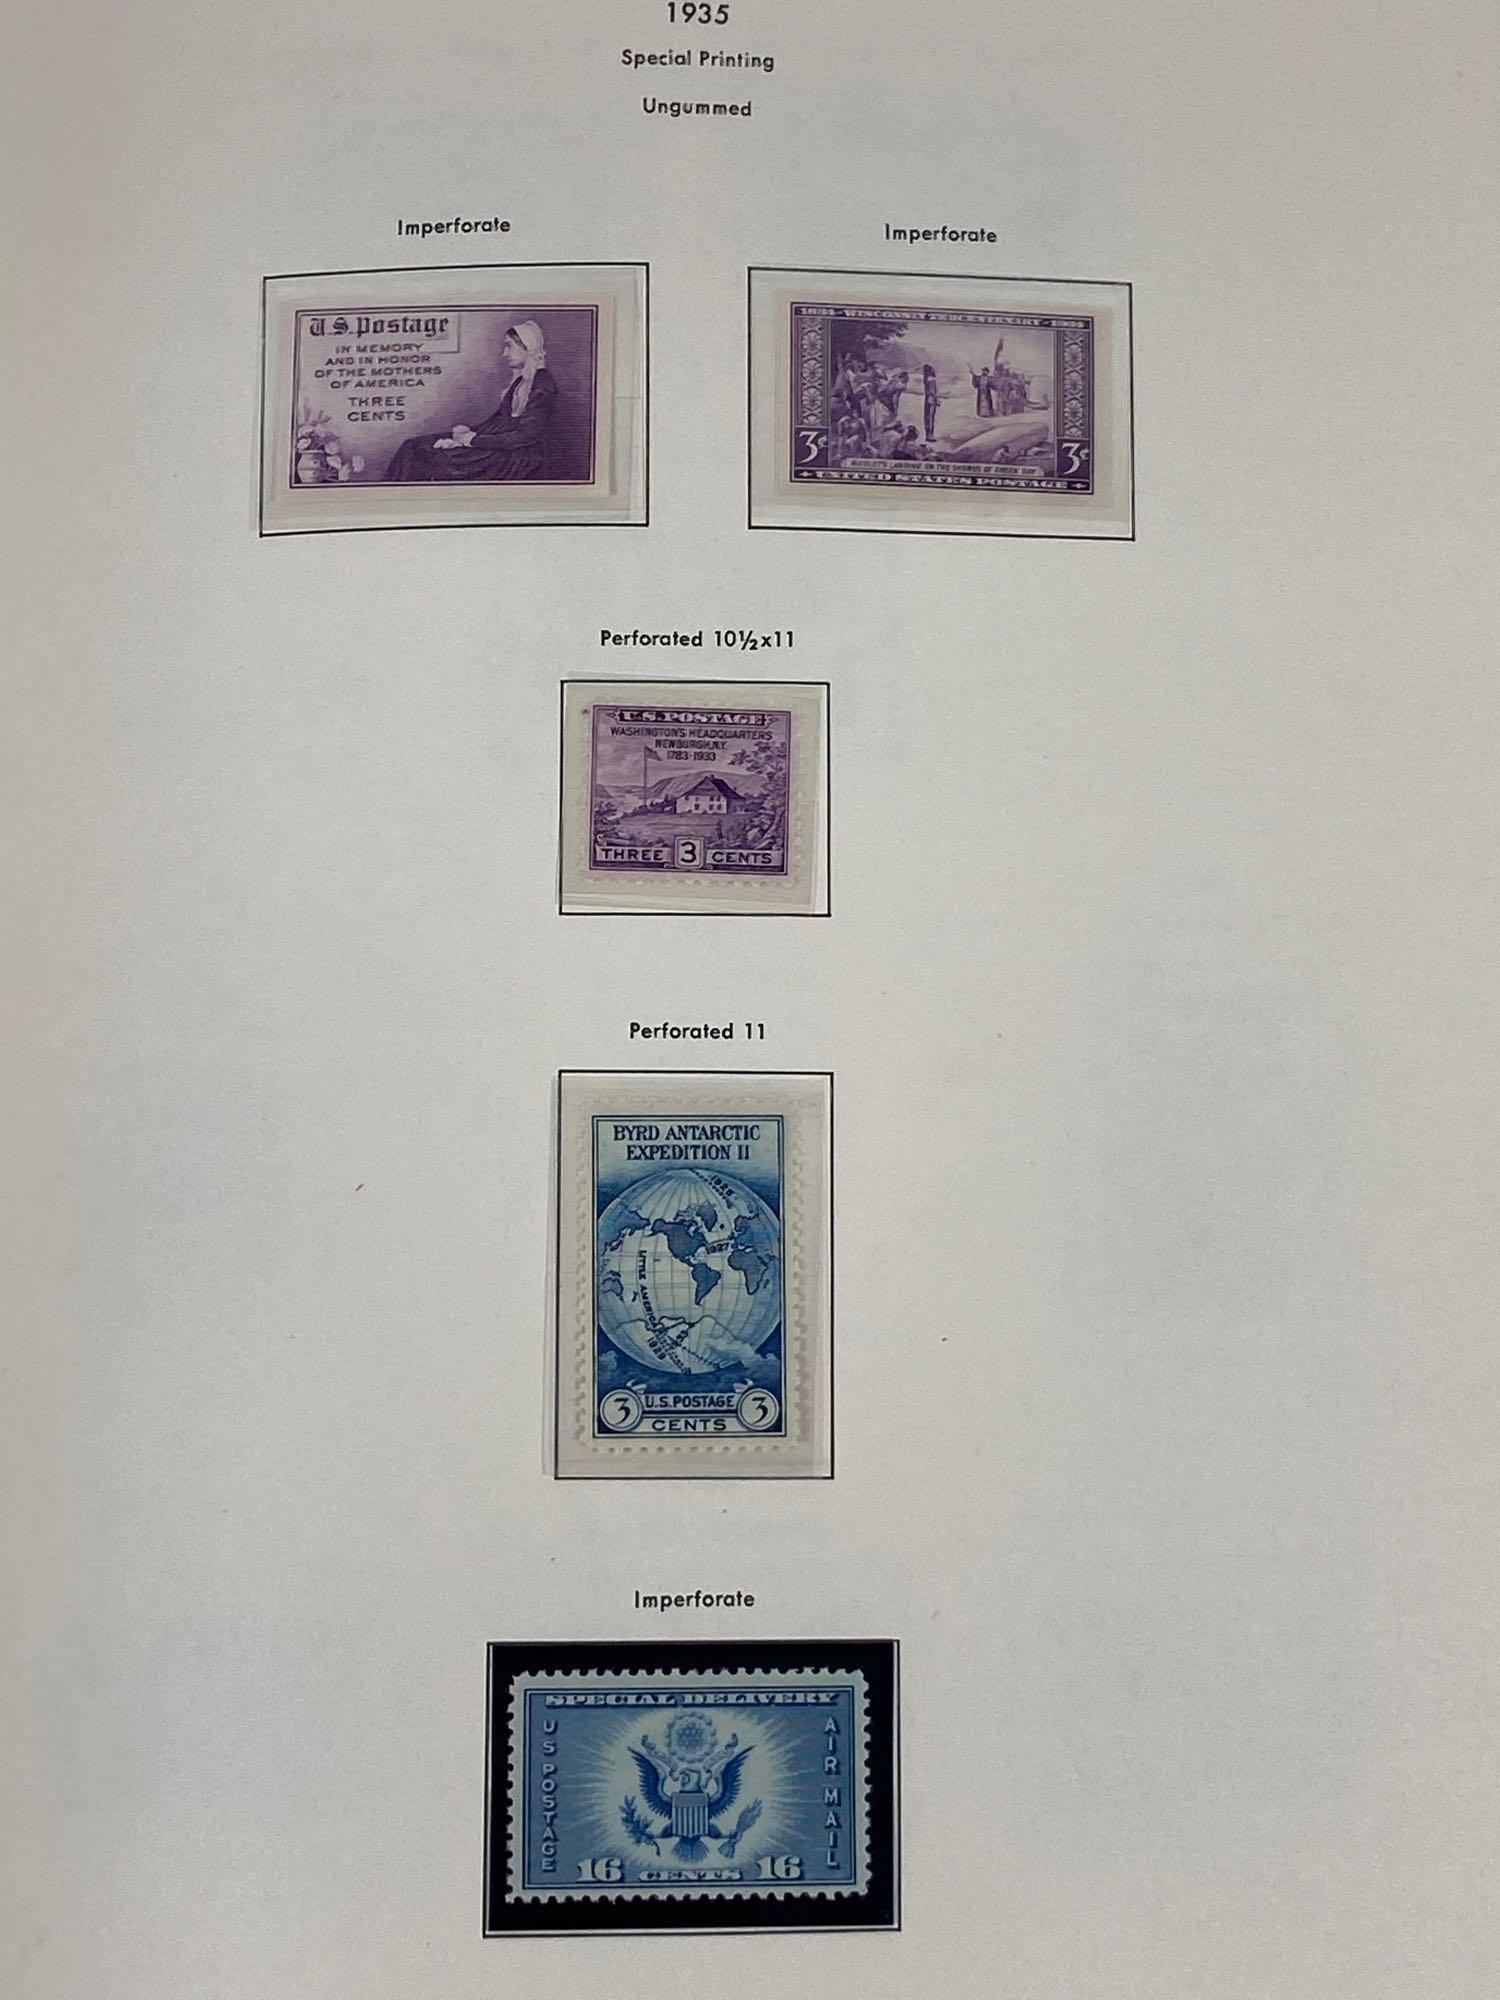 Album of Antique & Vintage United States Postage Stamps & Stamp Sheets